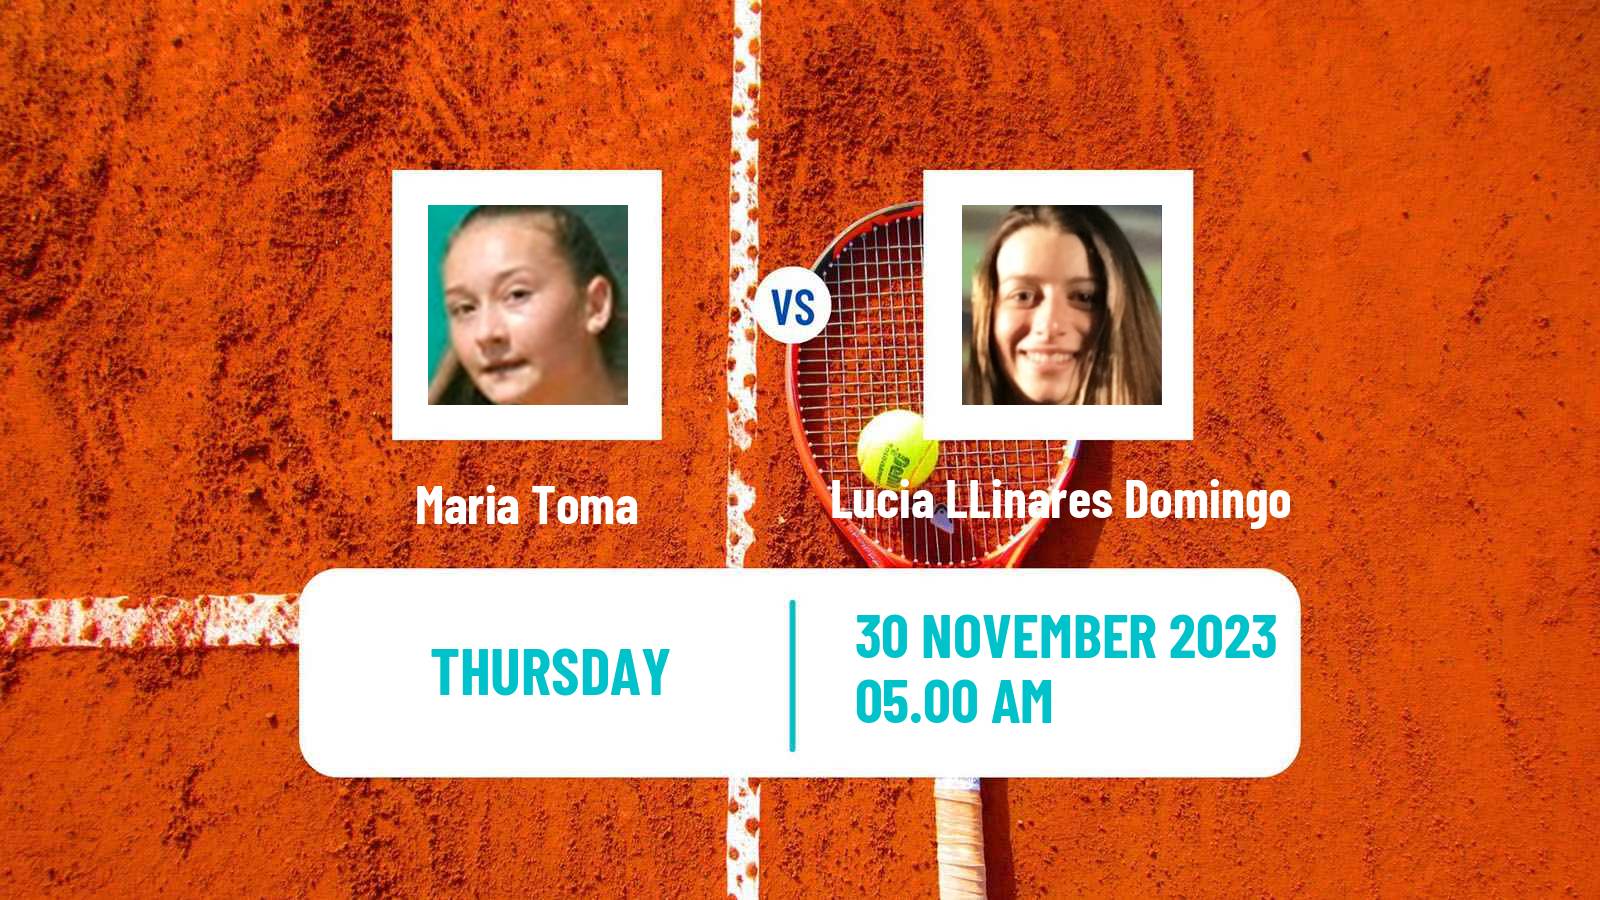 Tennis ITF W15 Valencia Women Maria Toma - Lucia LLinares Domingo